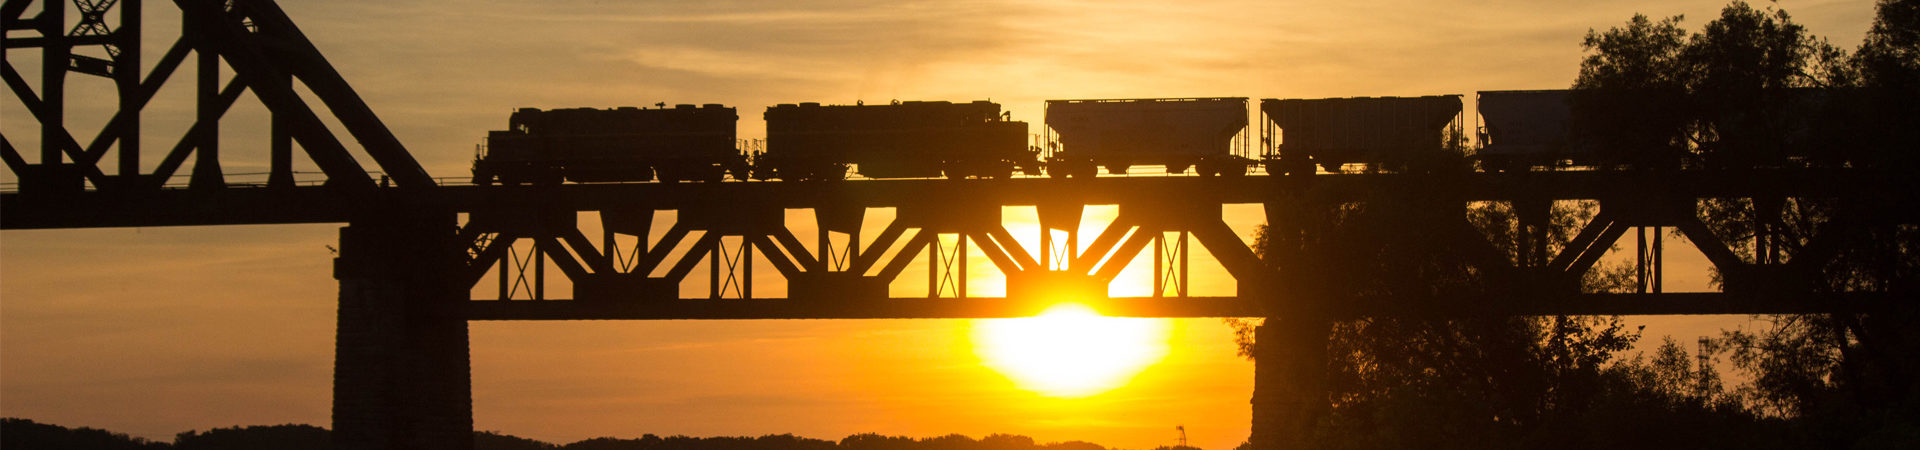 Image of LIRC train on a bridge during sunset